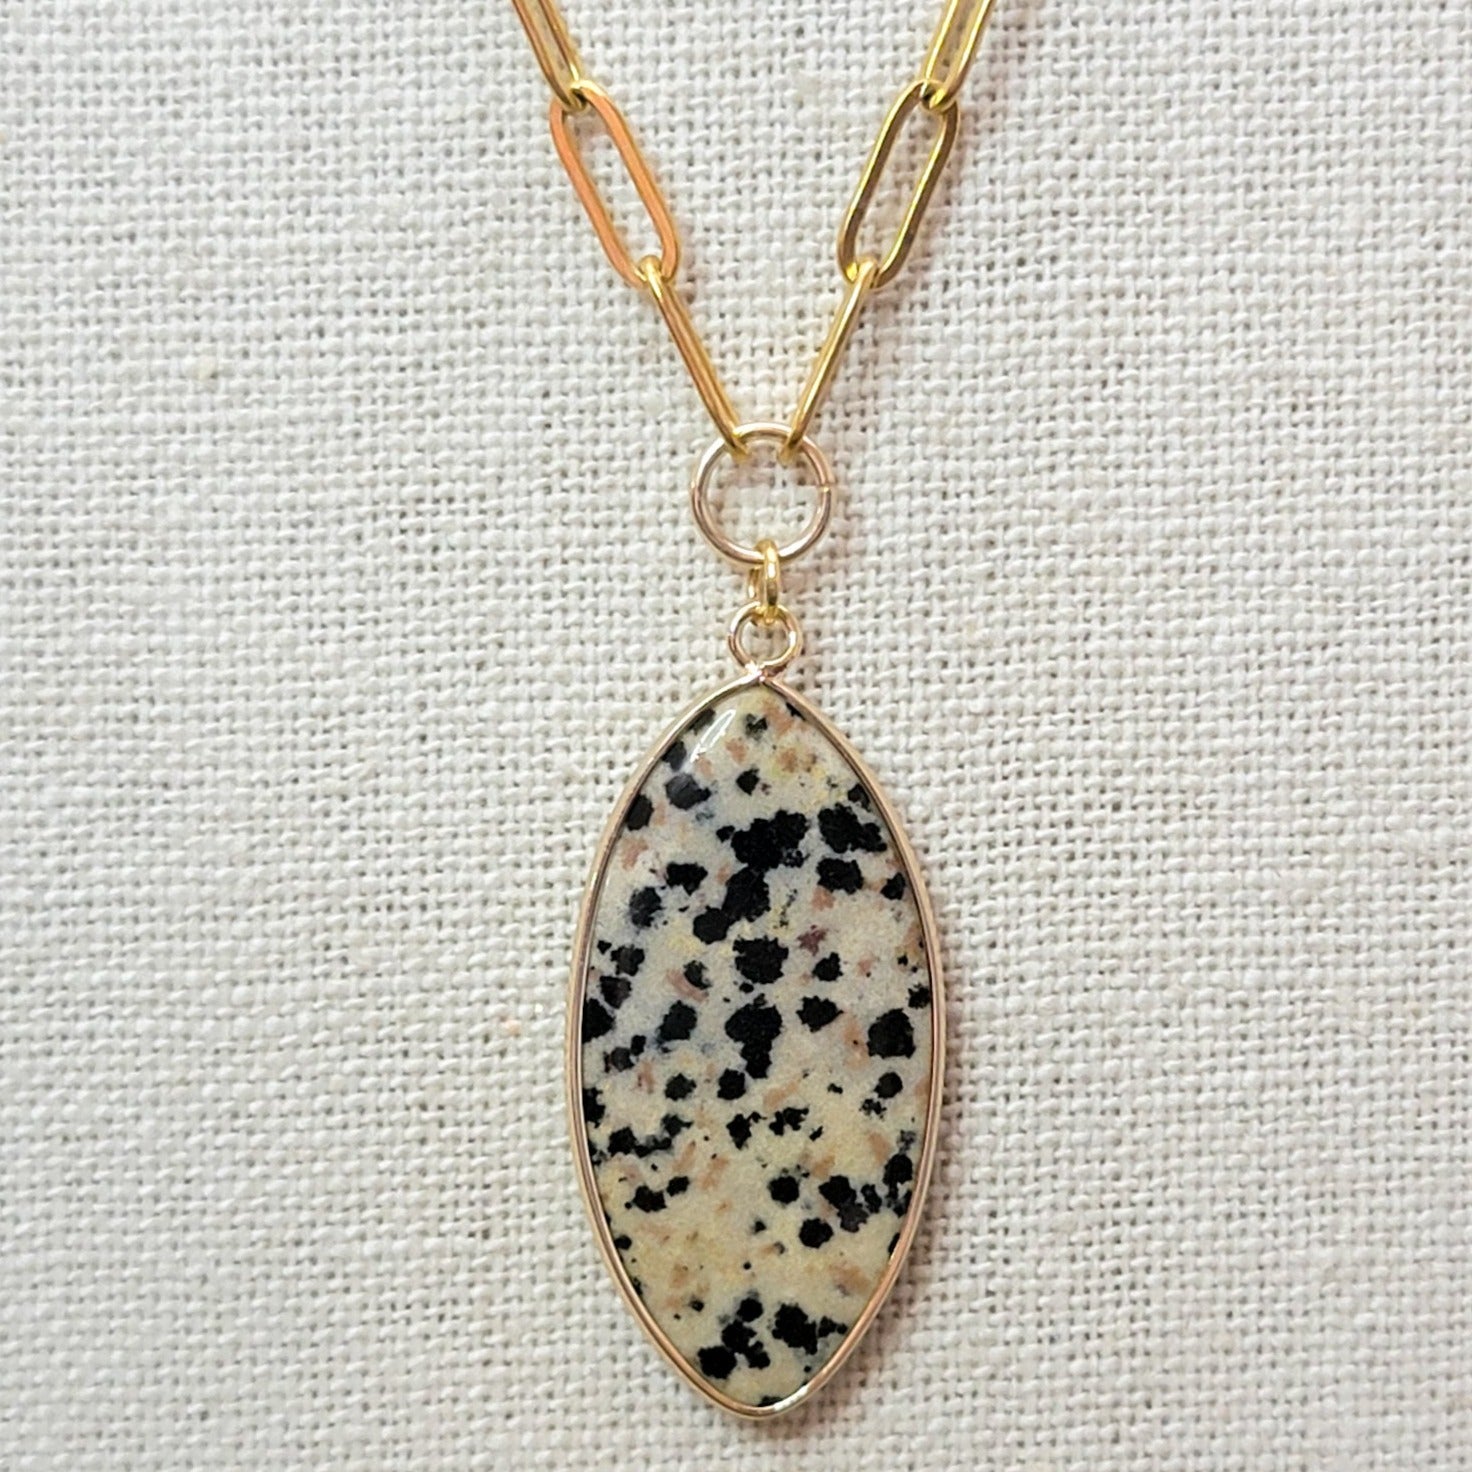 Dalmatian Jasper Pendant Necklace - Nicki Lynn Jewelry